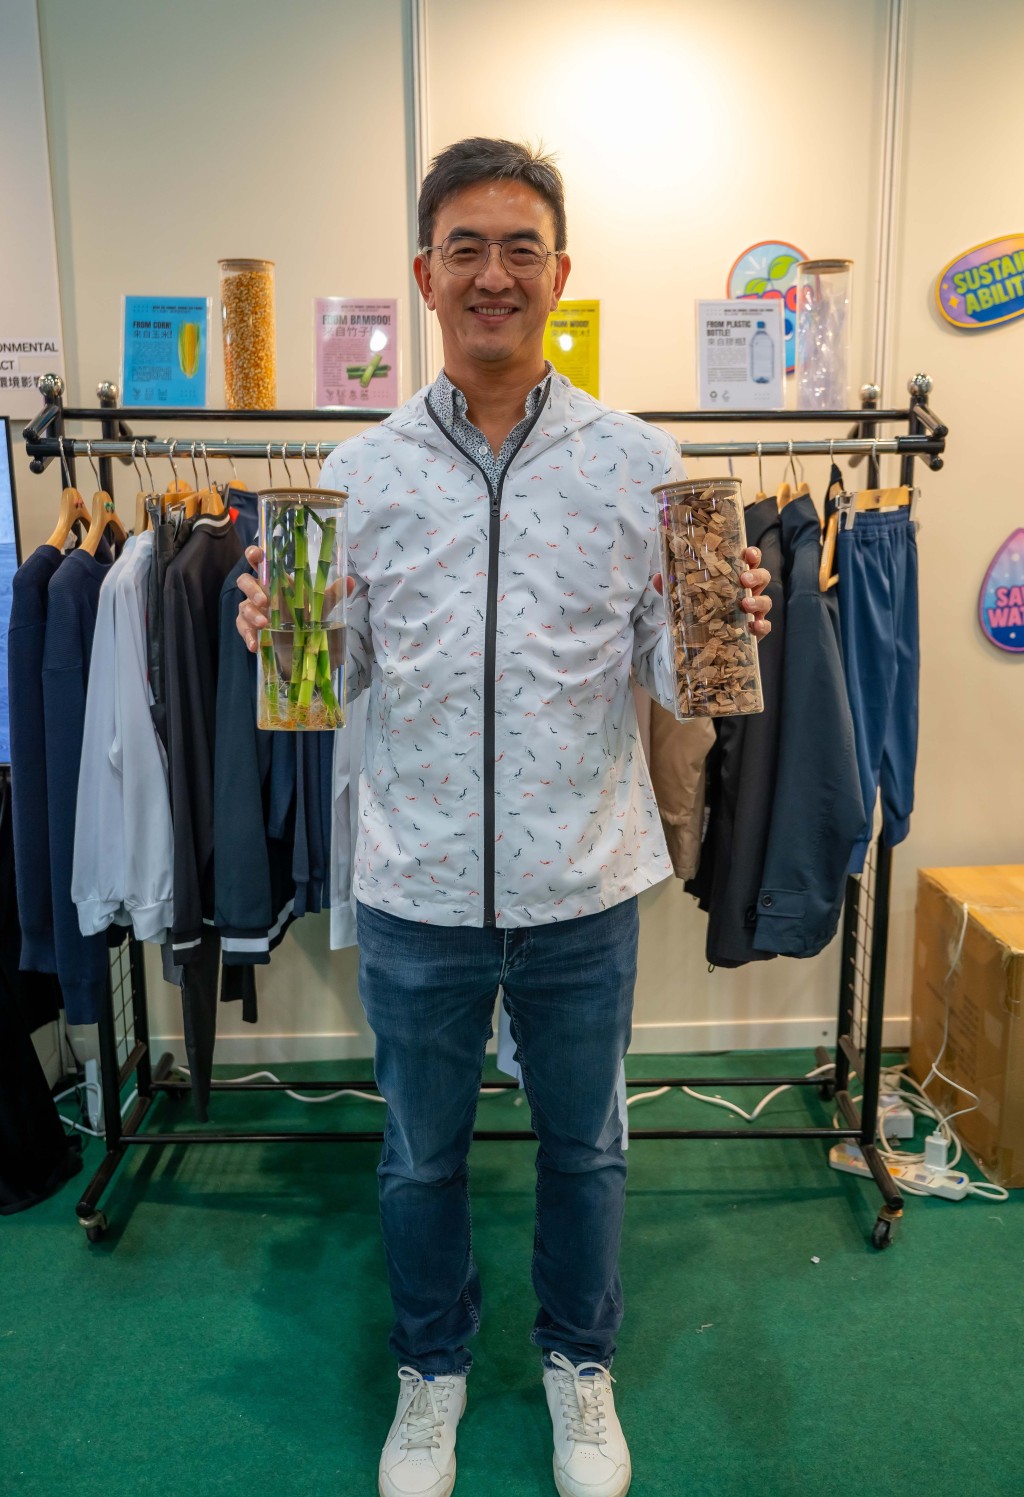 Paul經營家族企業慶年（Hanin），近年專注於可持續發展，他希望大眾對可持續時尚、升級再造衣物、環保材料有更深入認識。